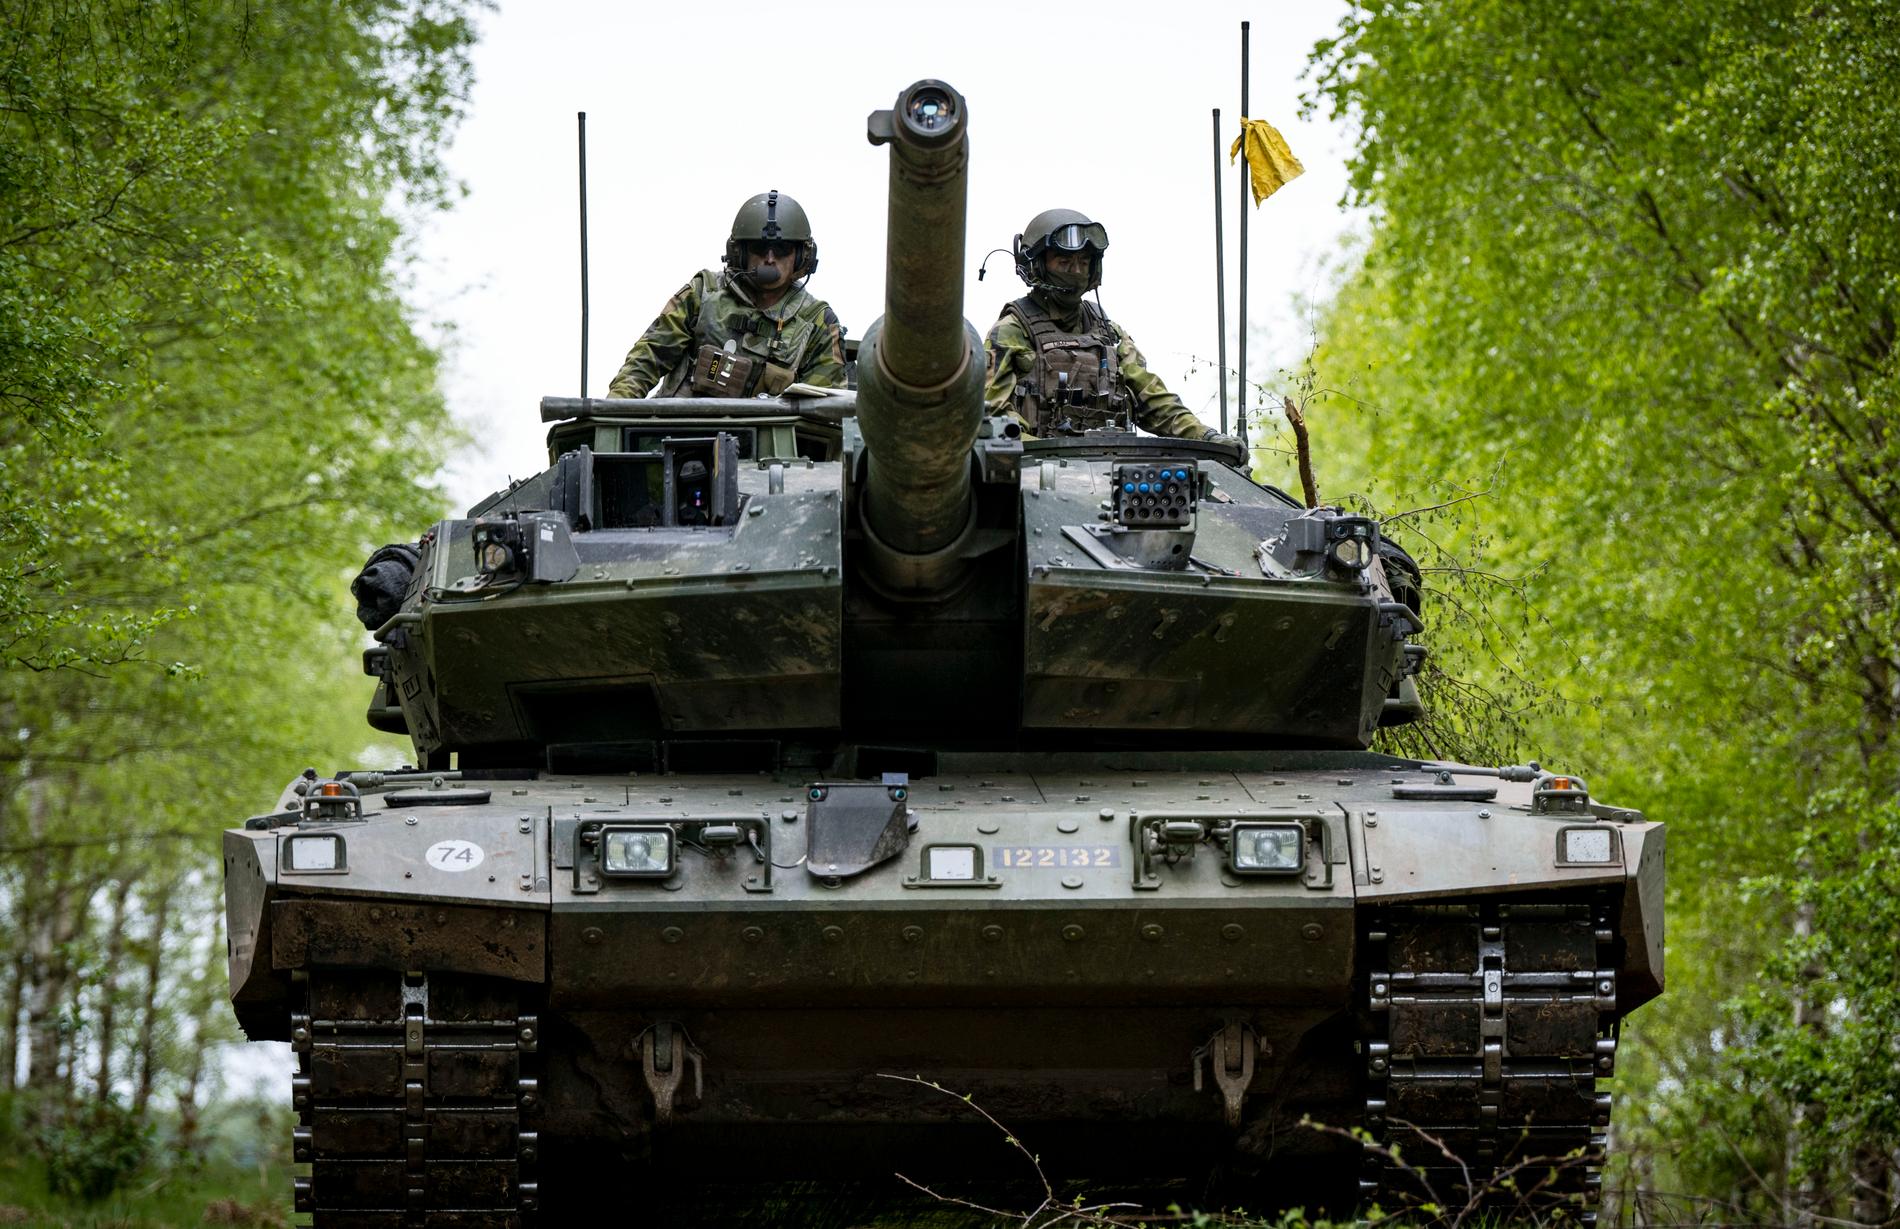 En svensk Leopard 2 stridsvagn (Strv 122) vid en markstridsövning.